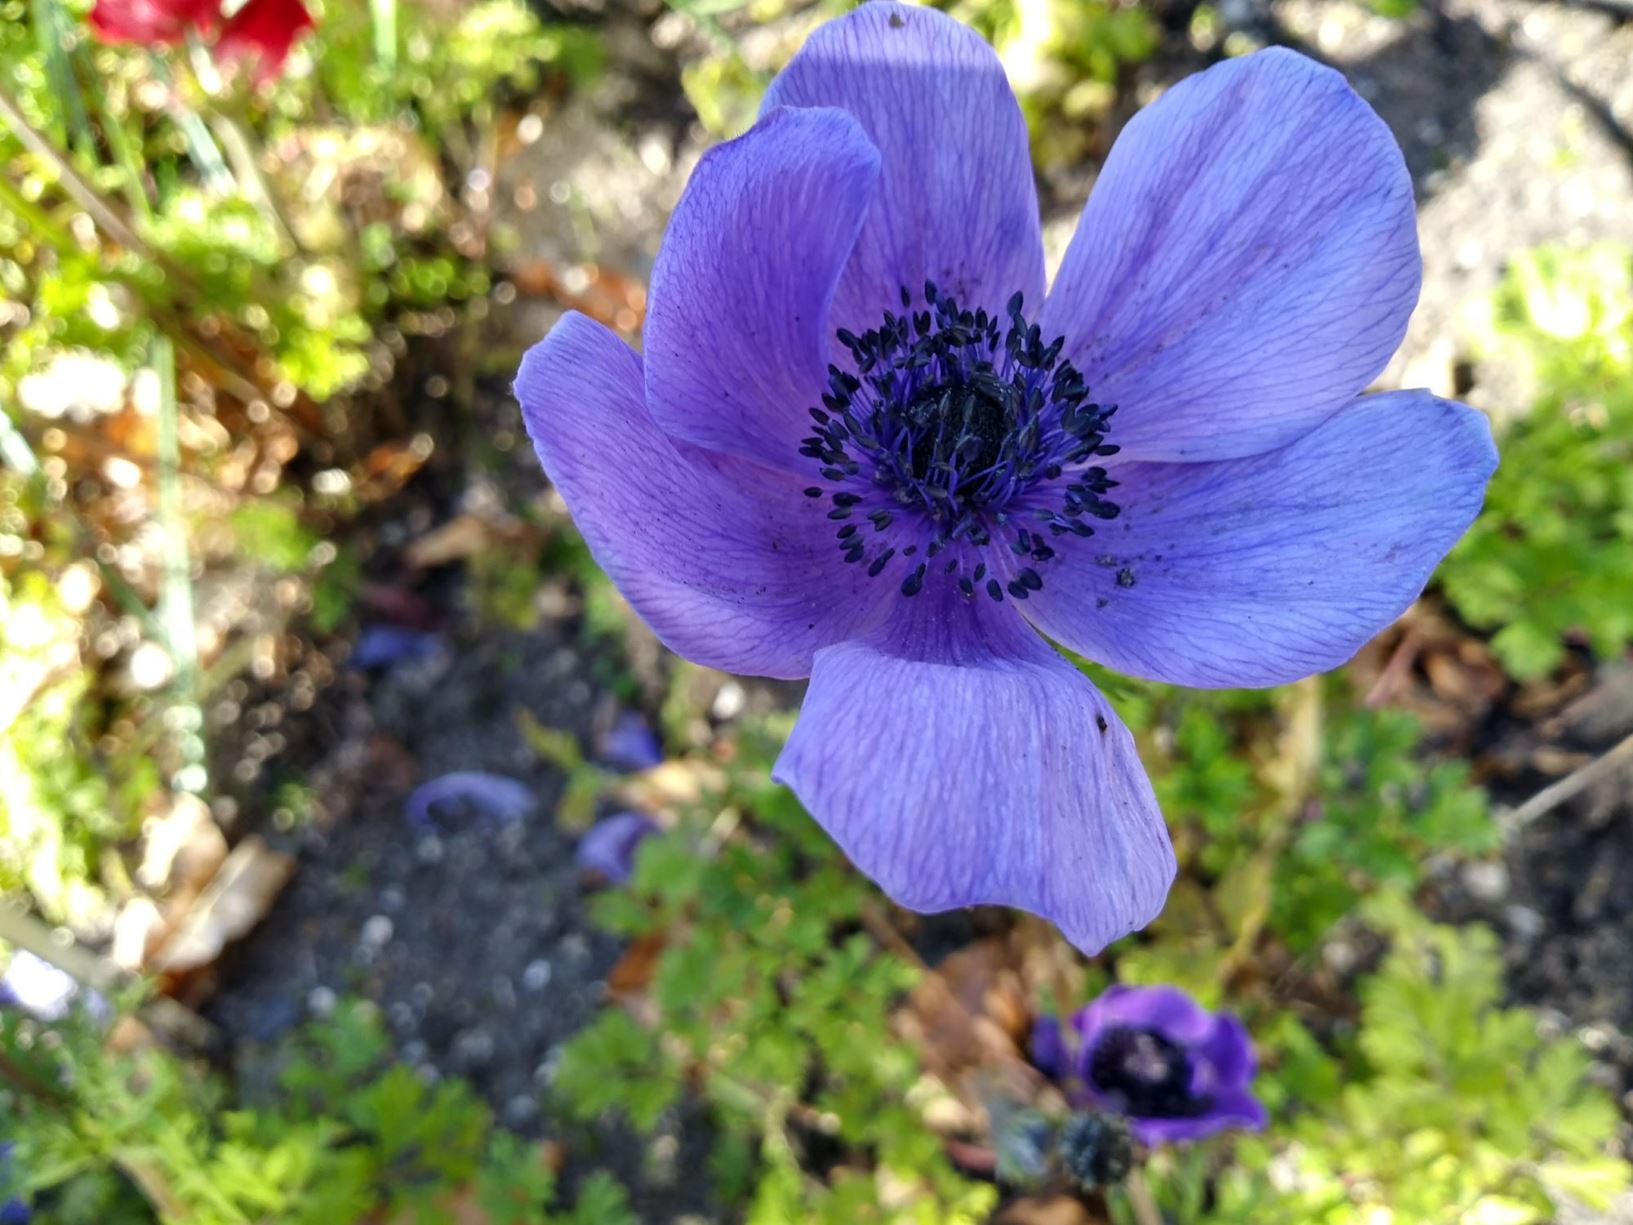 Anemone coronaria - Anemoon, Garden anemone, Irish anemone, anémone des fleuristes